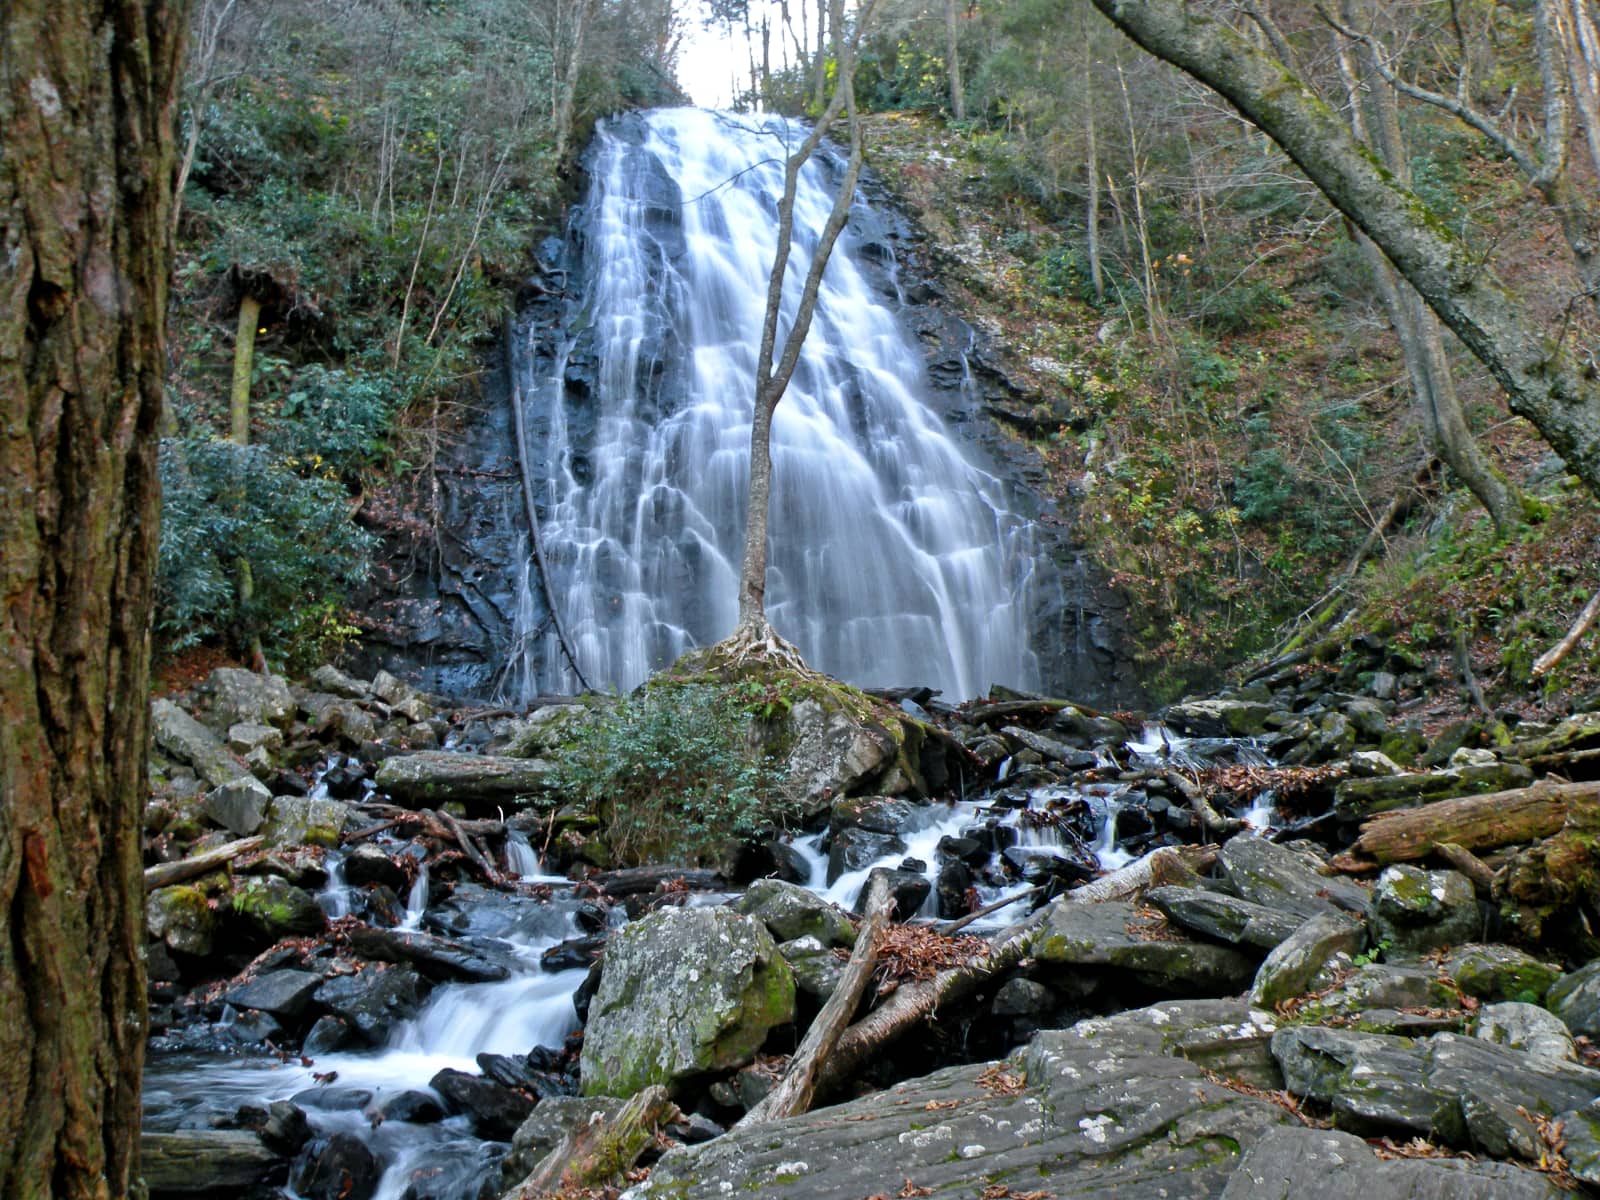 Long exposure of waterfall